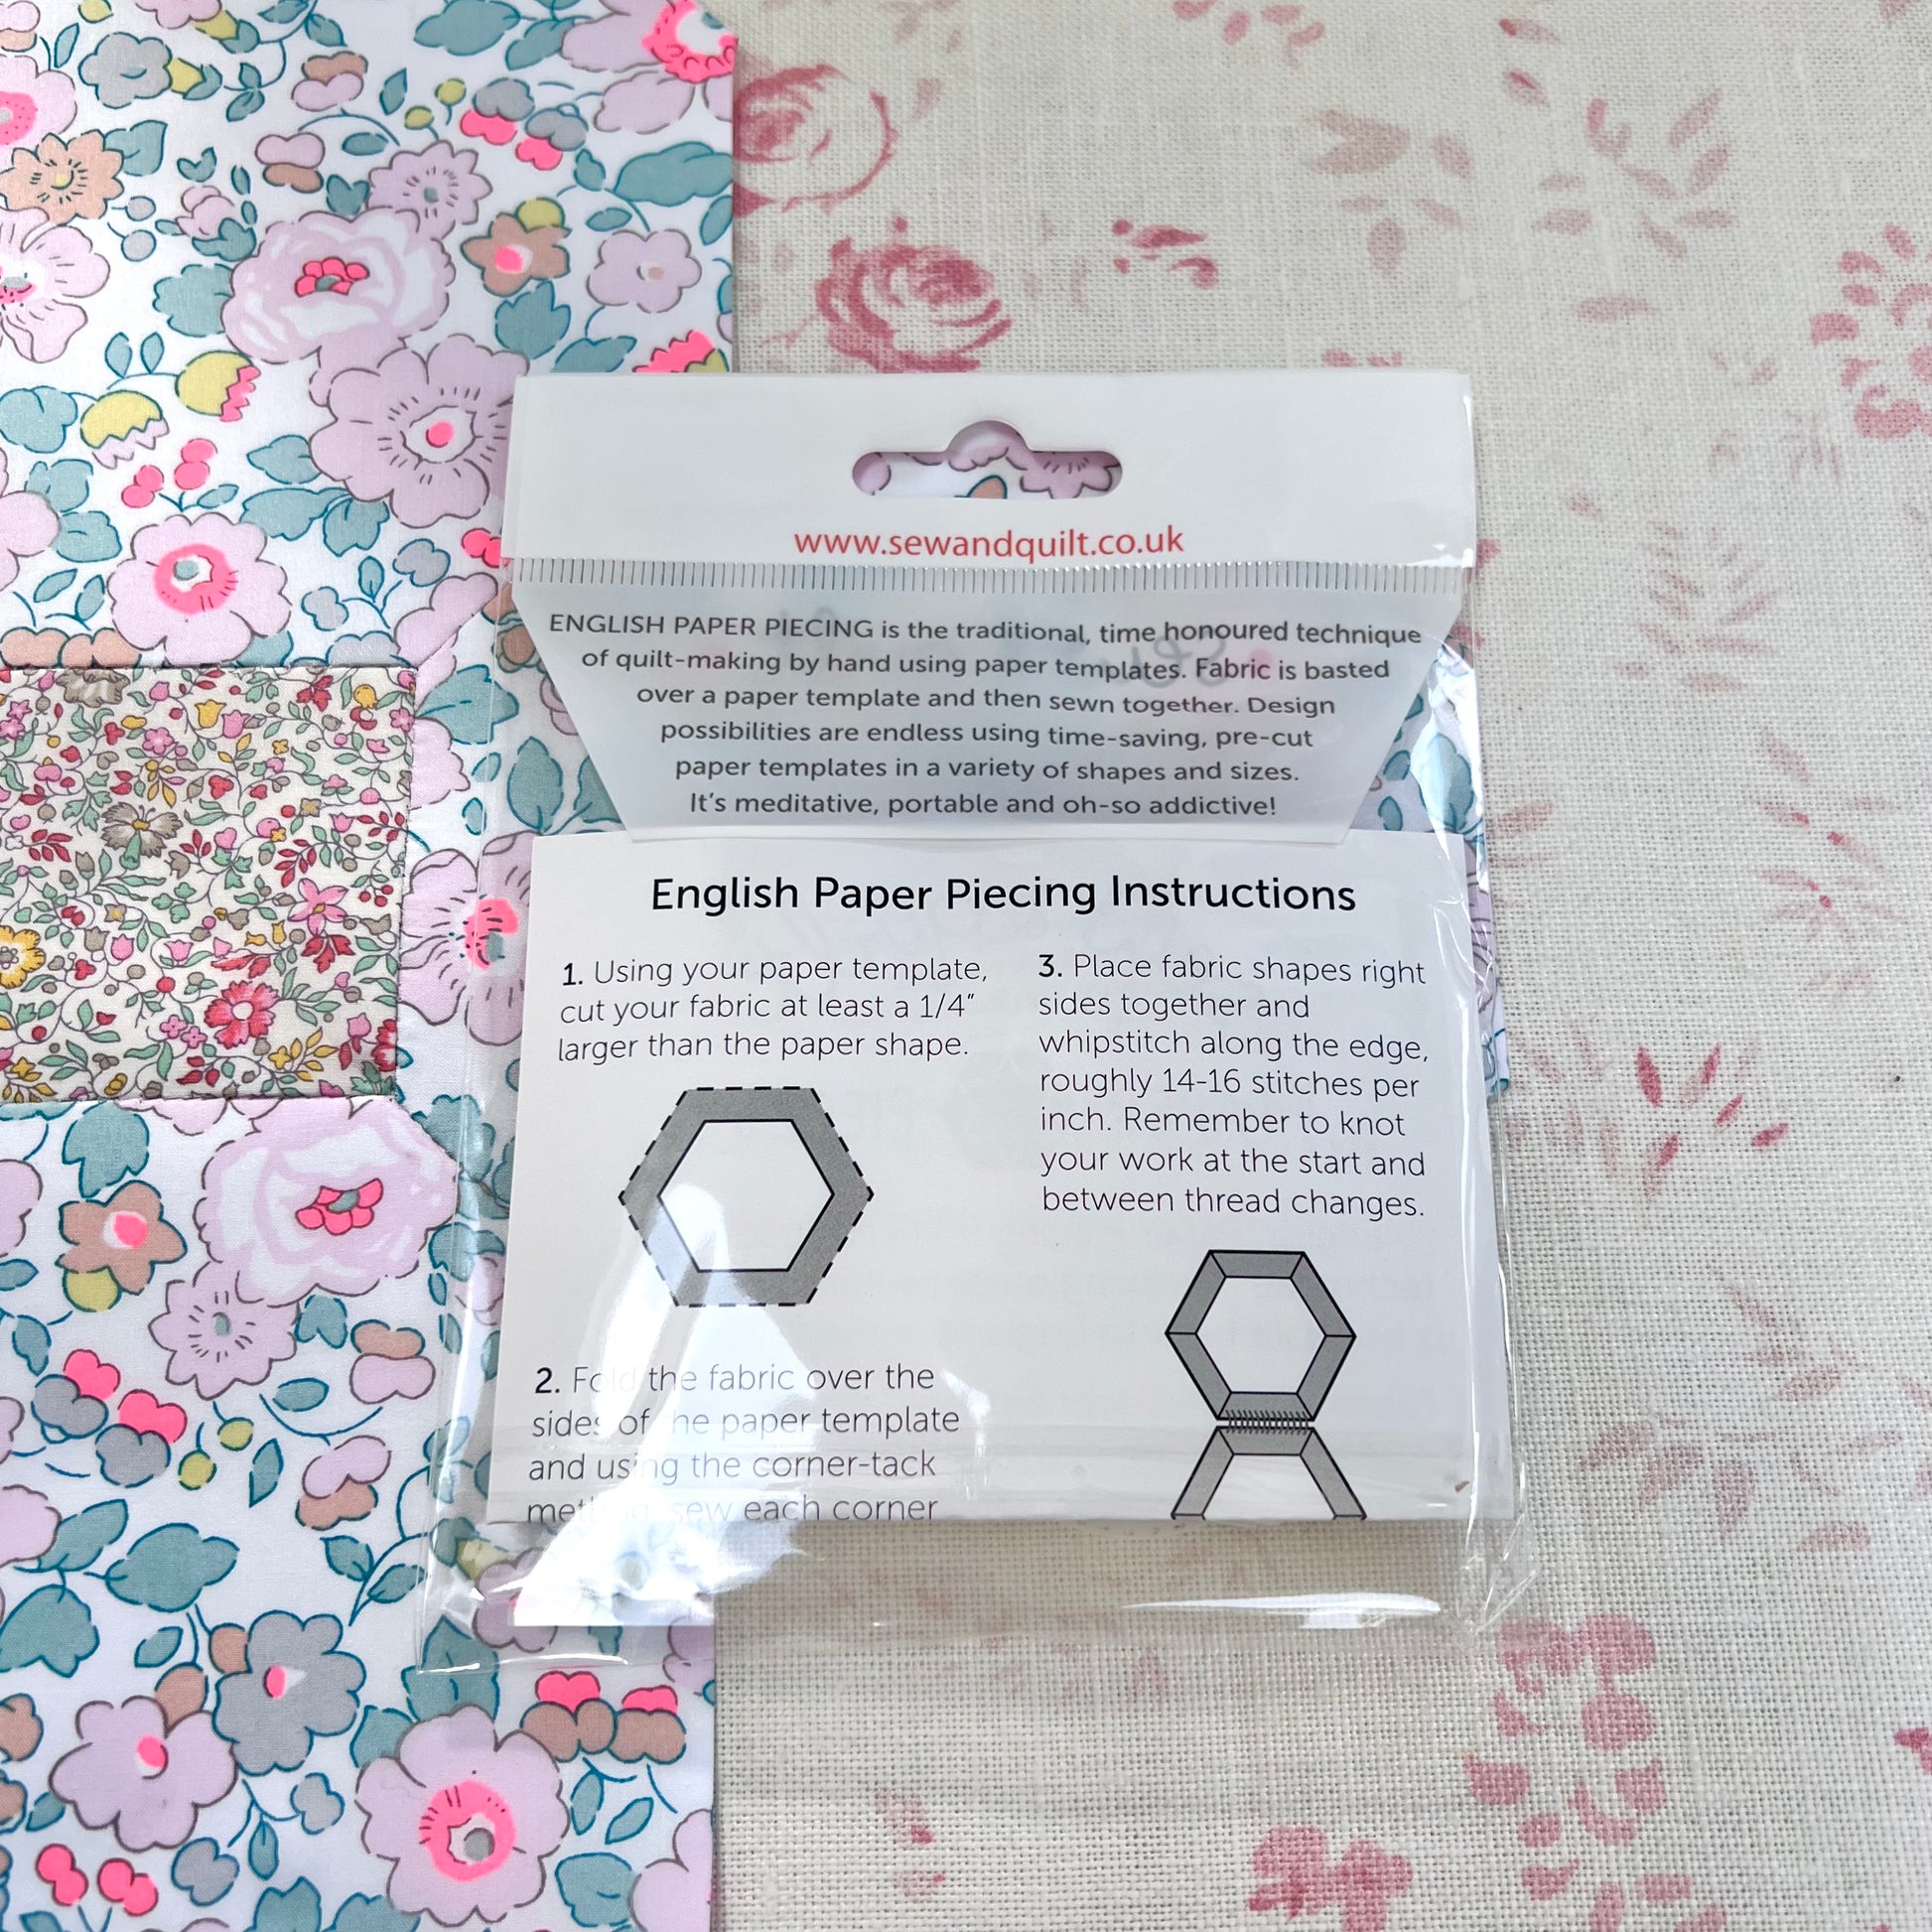 English paper piecing UK - supplies, templates & charm packs